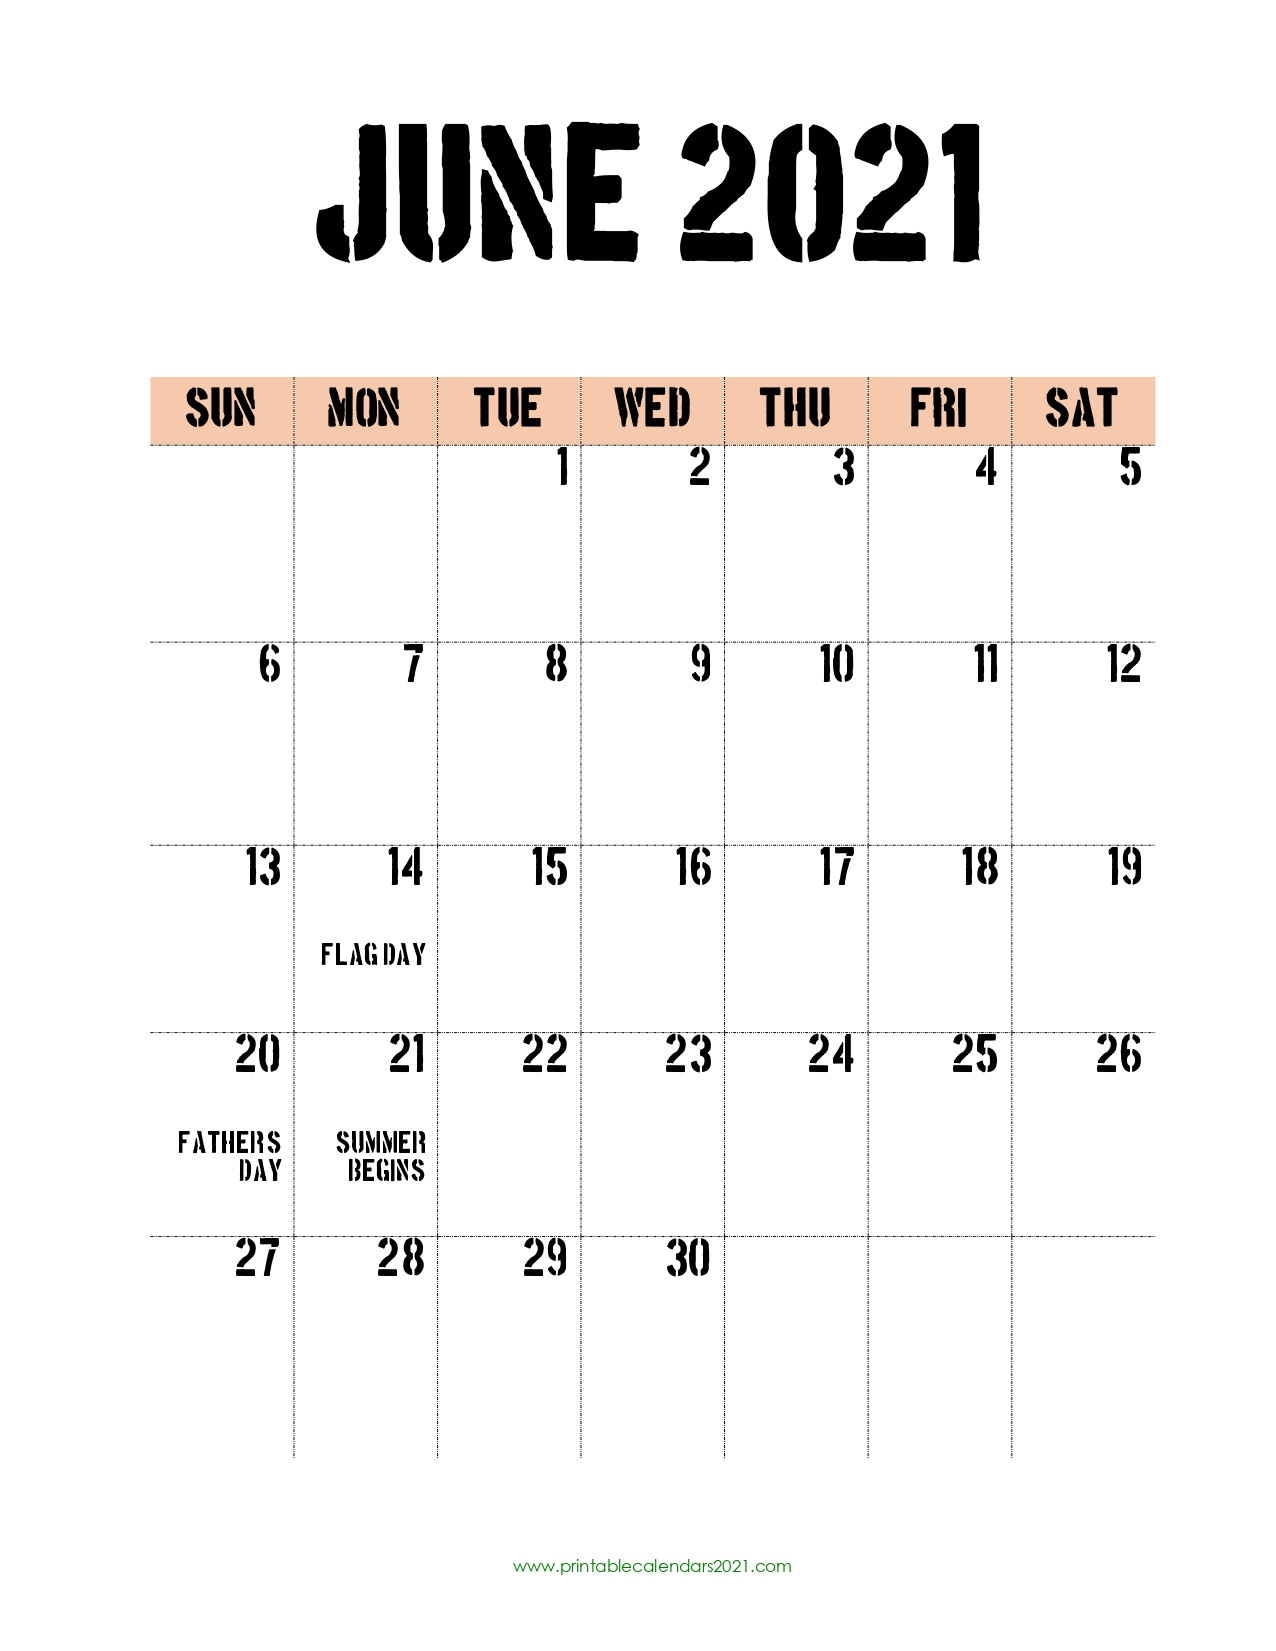 60+ Free June 2021 Calendar Printable With Holidays, Blank-Blank June Calendar 2021